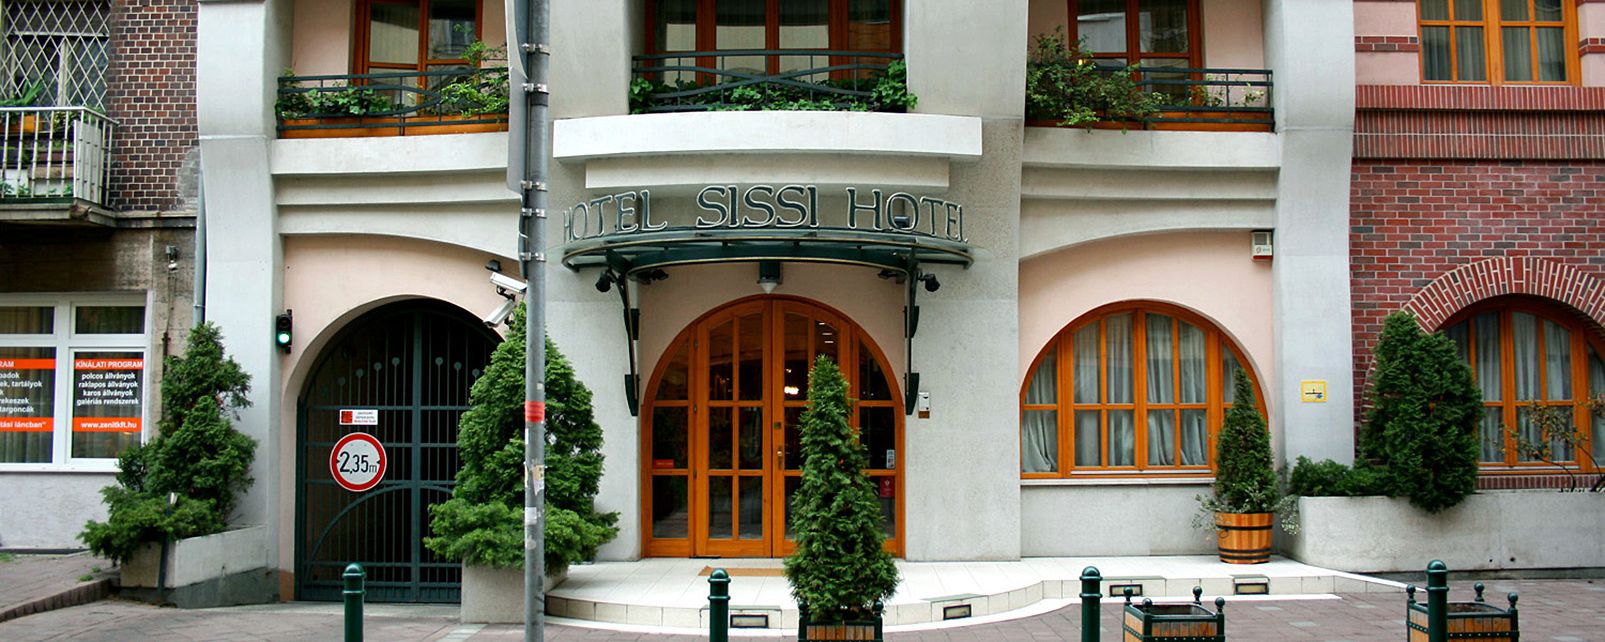 Hotel Sissi